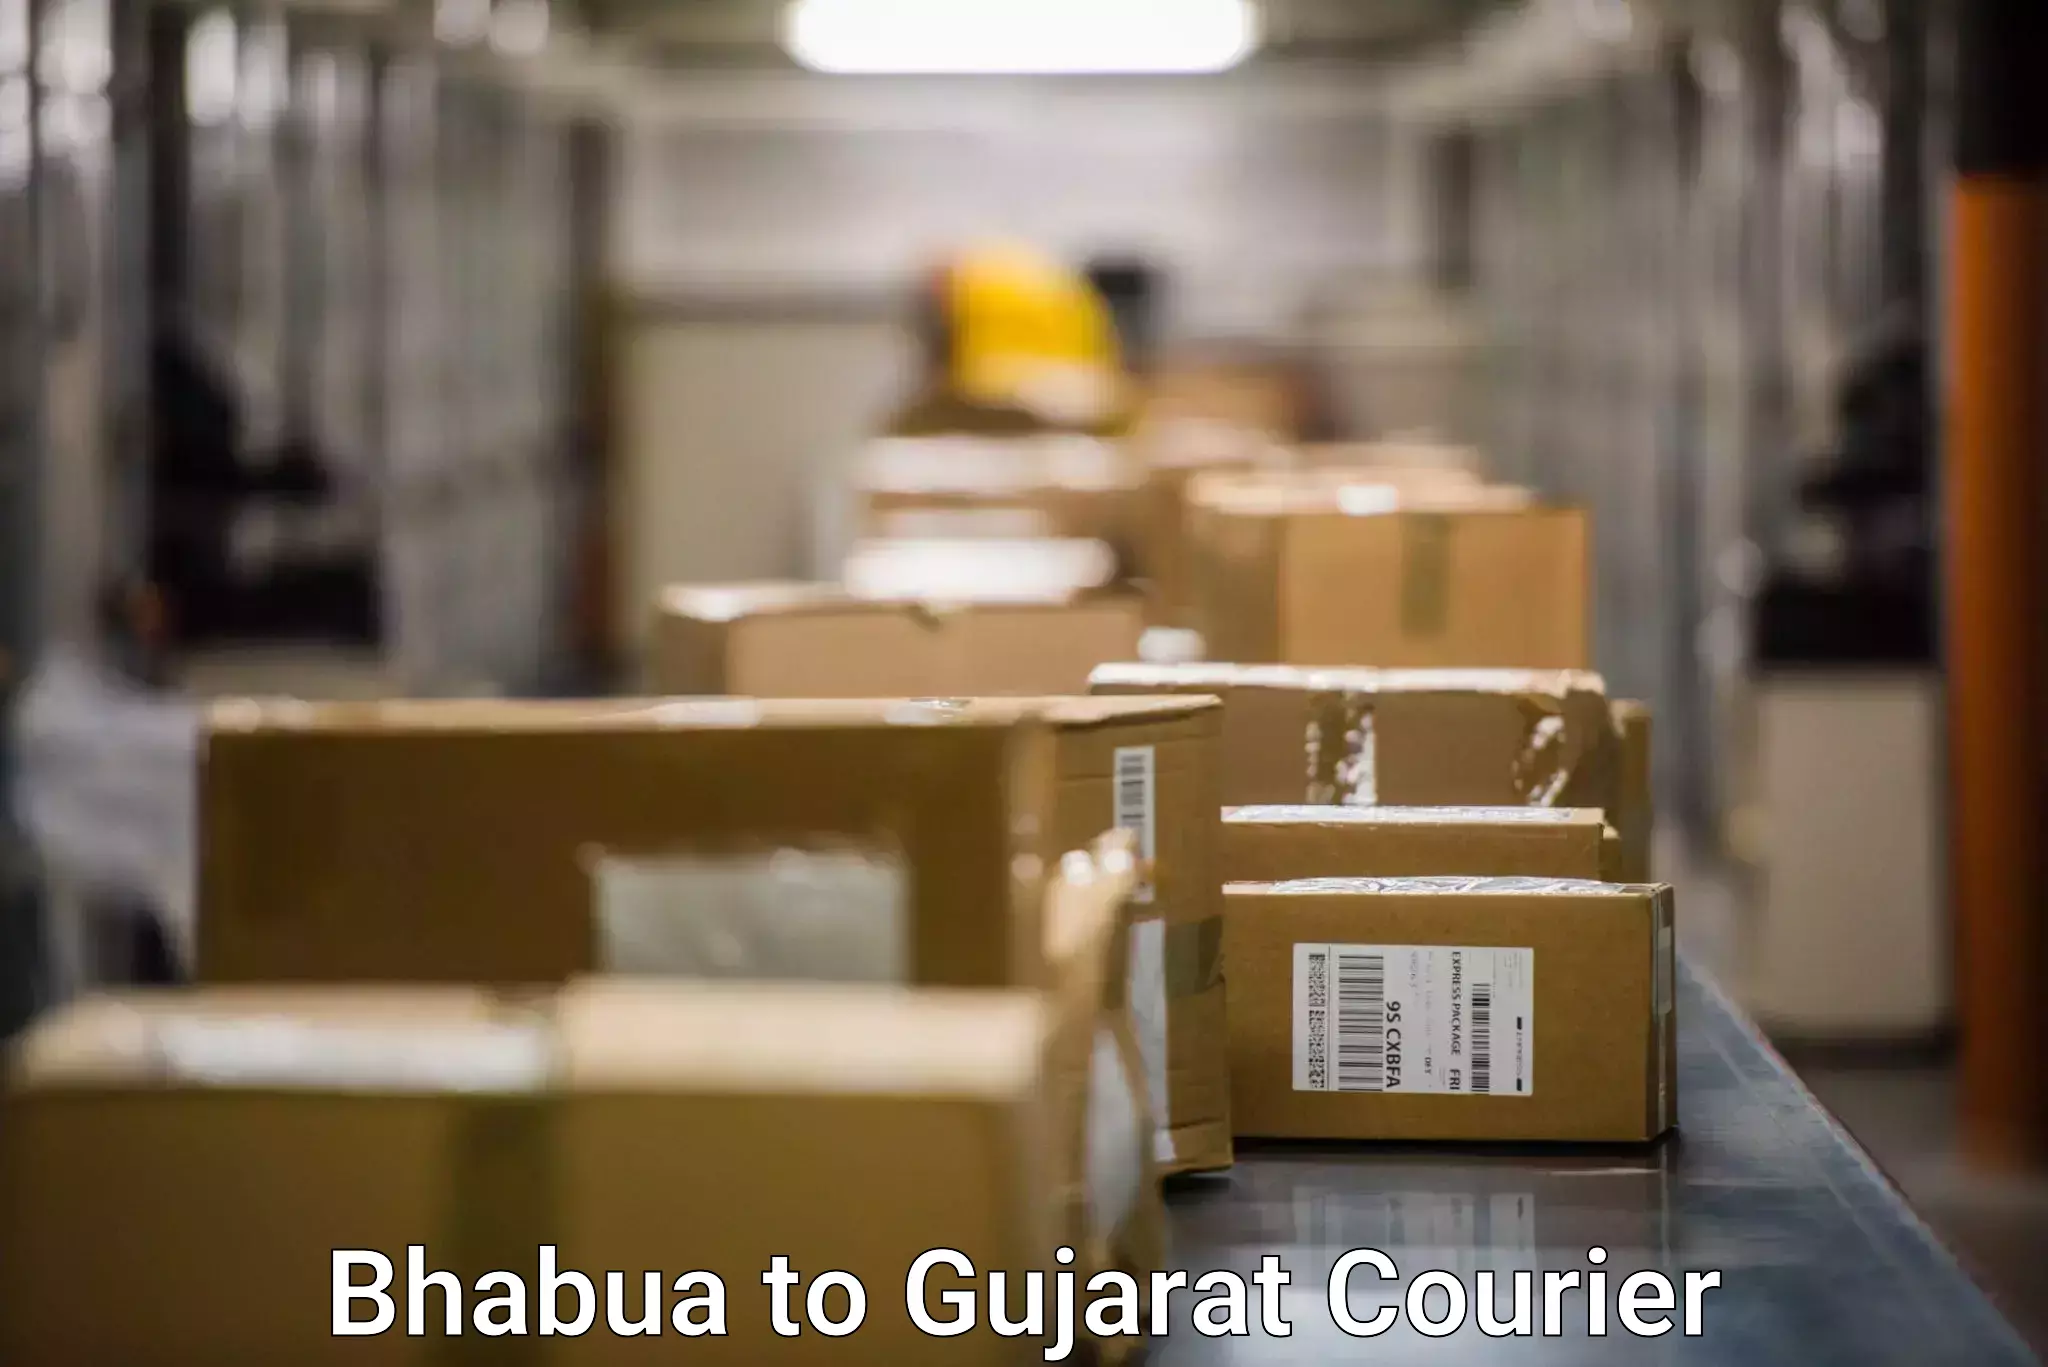 Express delivery capabilities Bhabua to Banaskantha